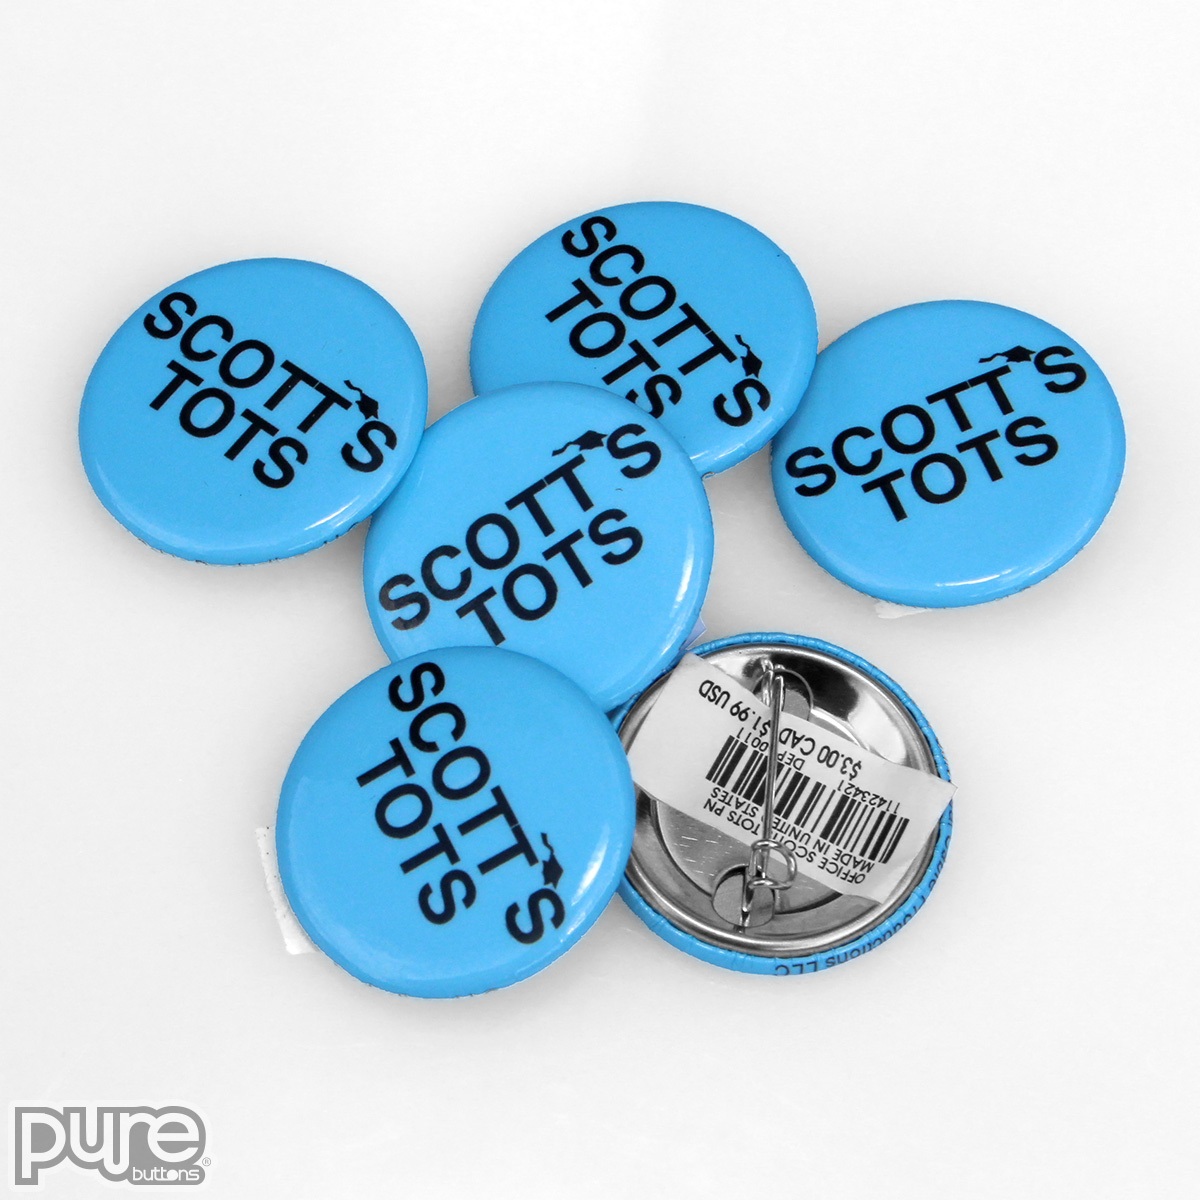 The Office NBC Official Merchandise - Scott's Tots Custom Button Pins